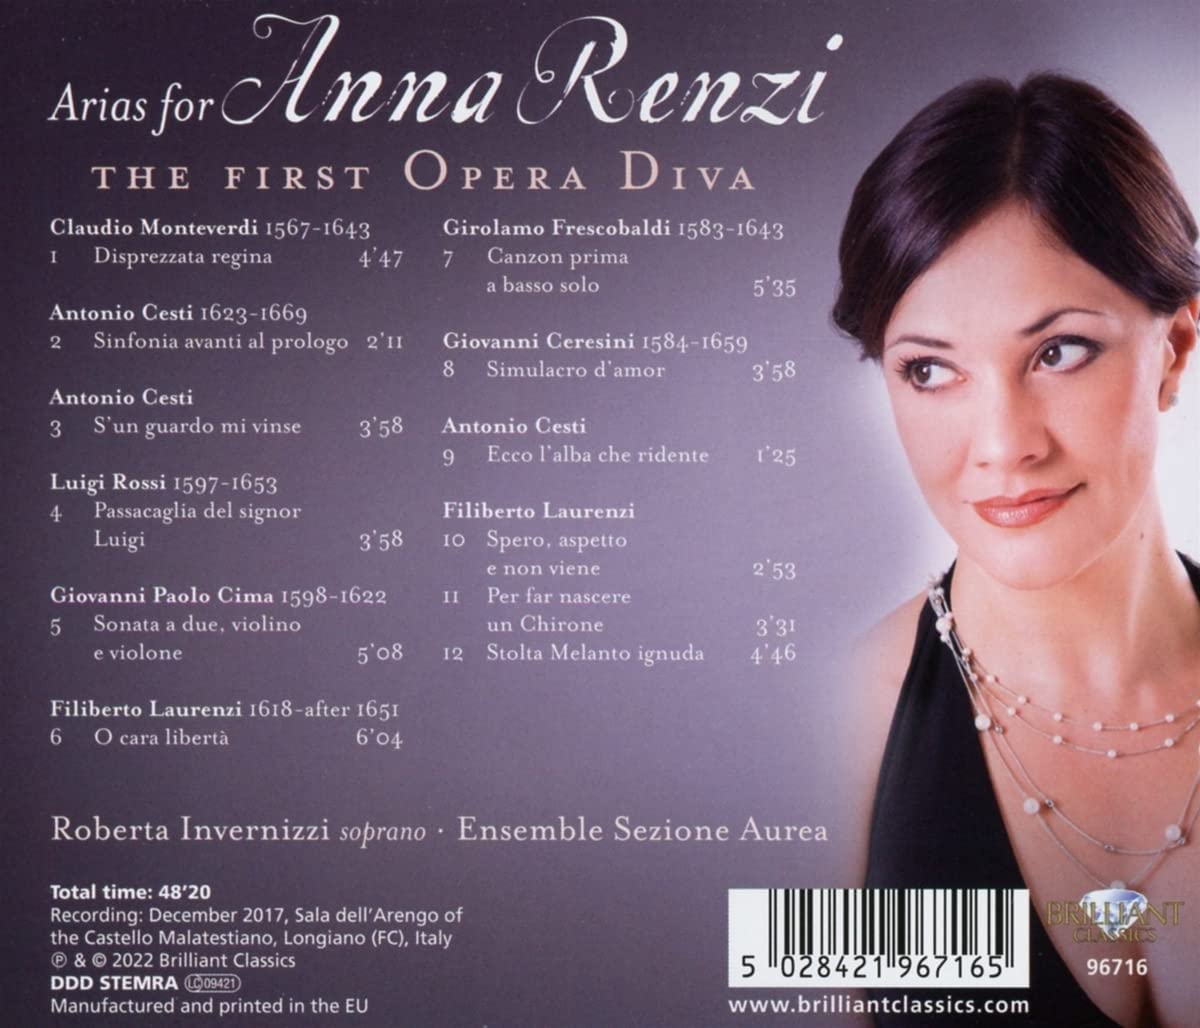 Roberta Invernizzi 안나 렌치를 위한 아리아 (Arias for Anna Renzi the First Opera Diva)